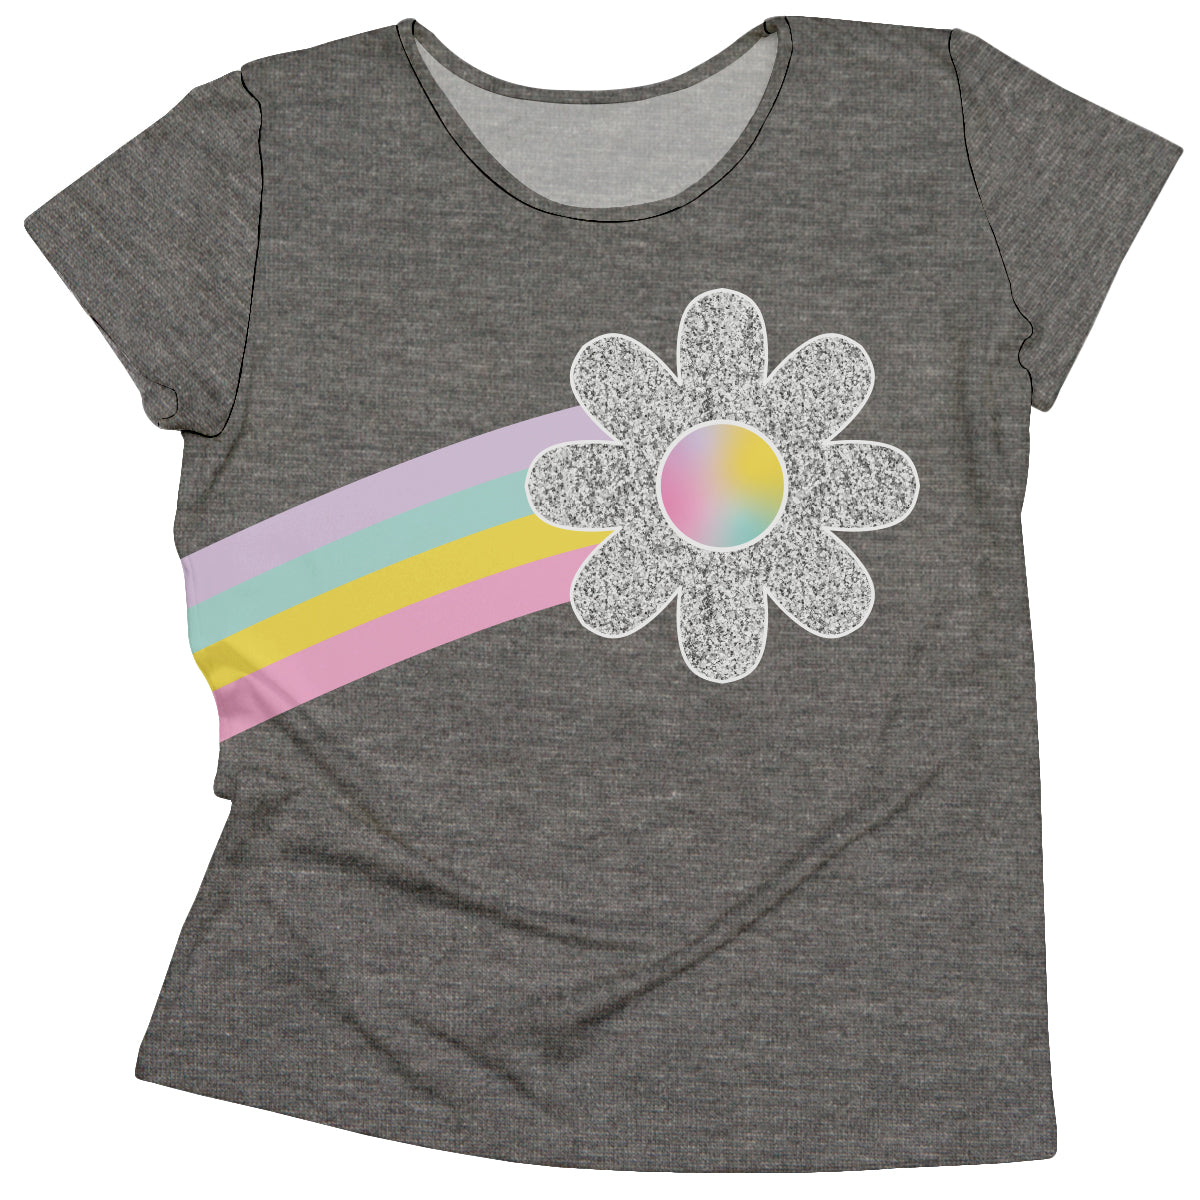 Flower and Rainbow Gray Short Sleeve Tee Shirt